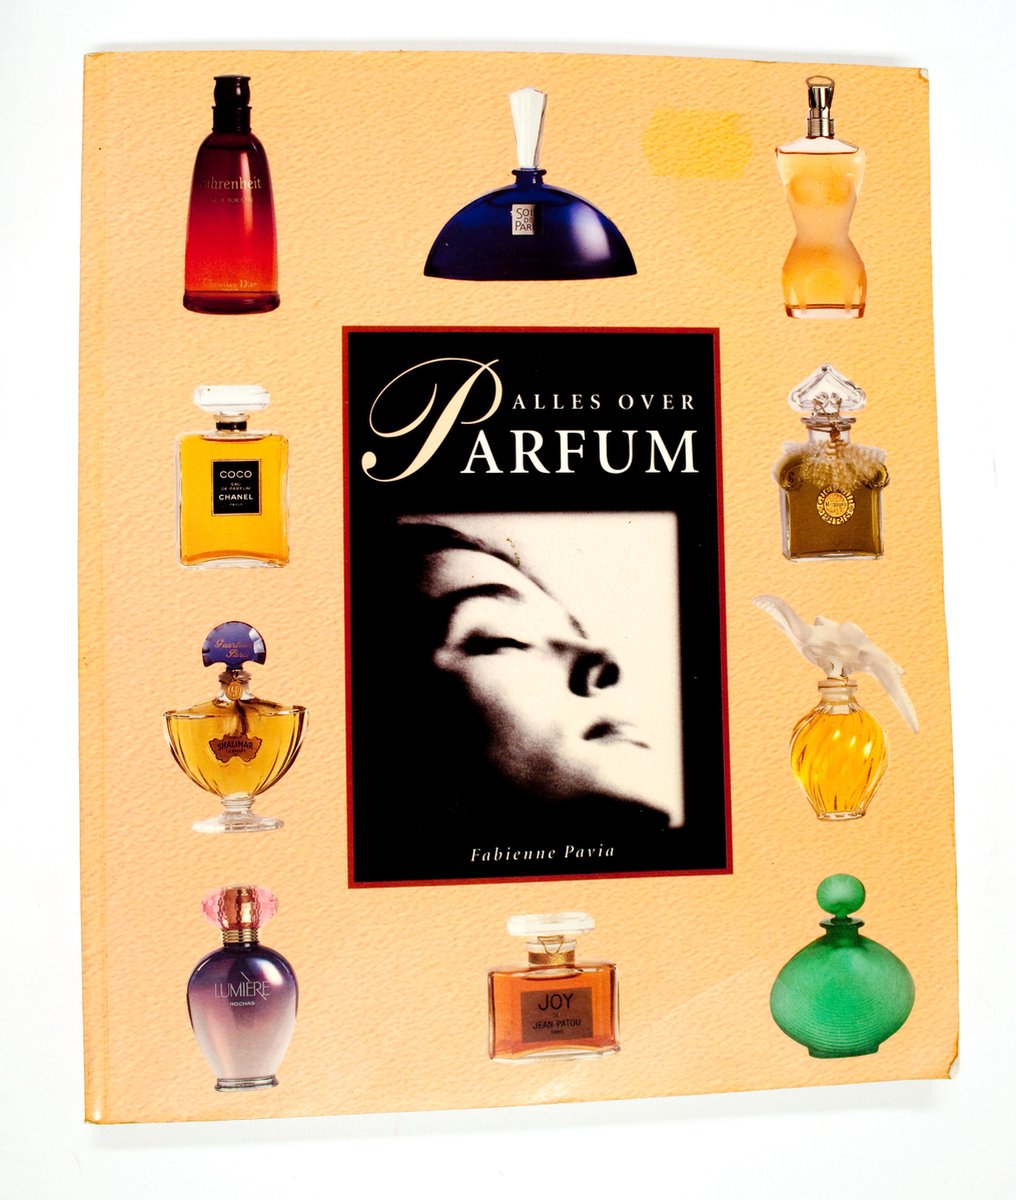 Alles over parfum